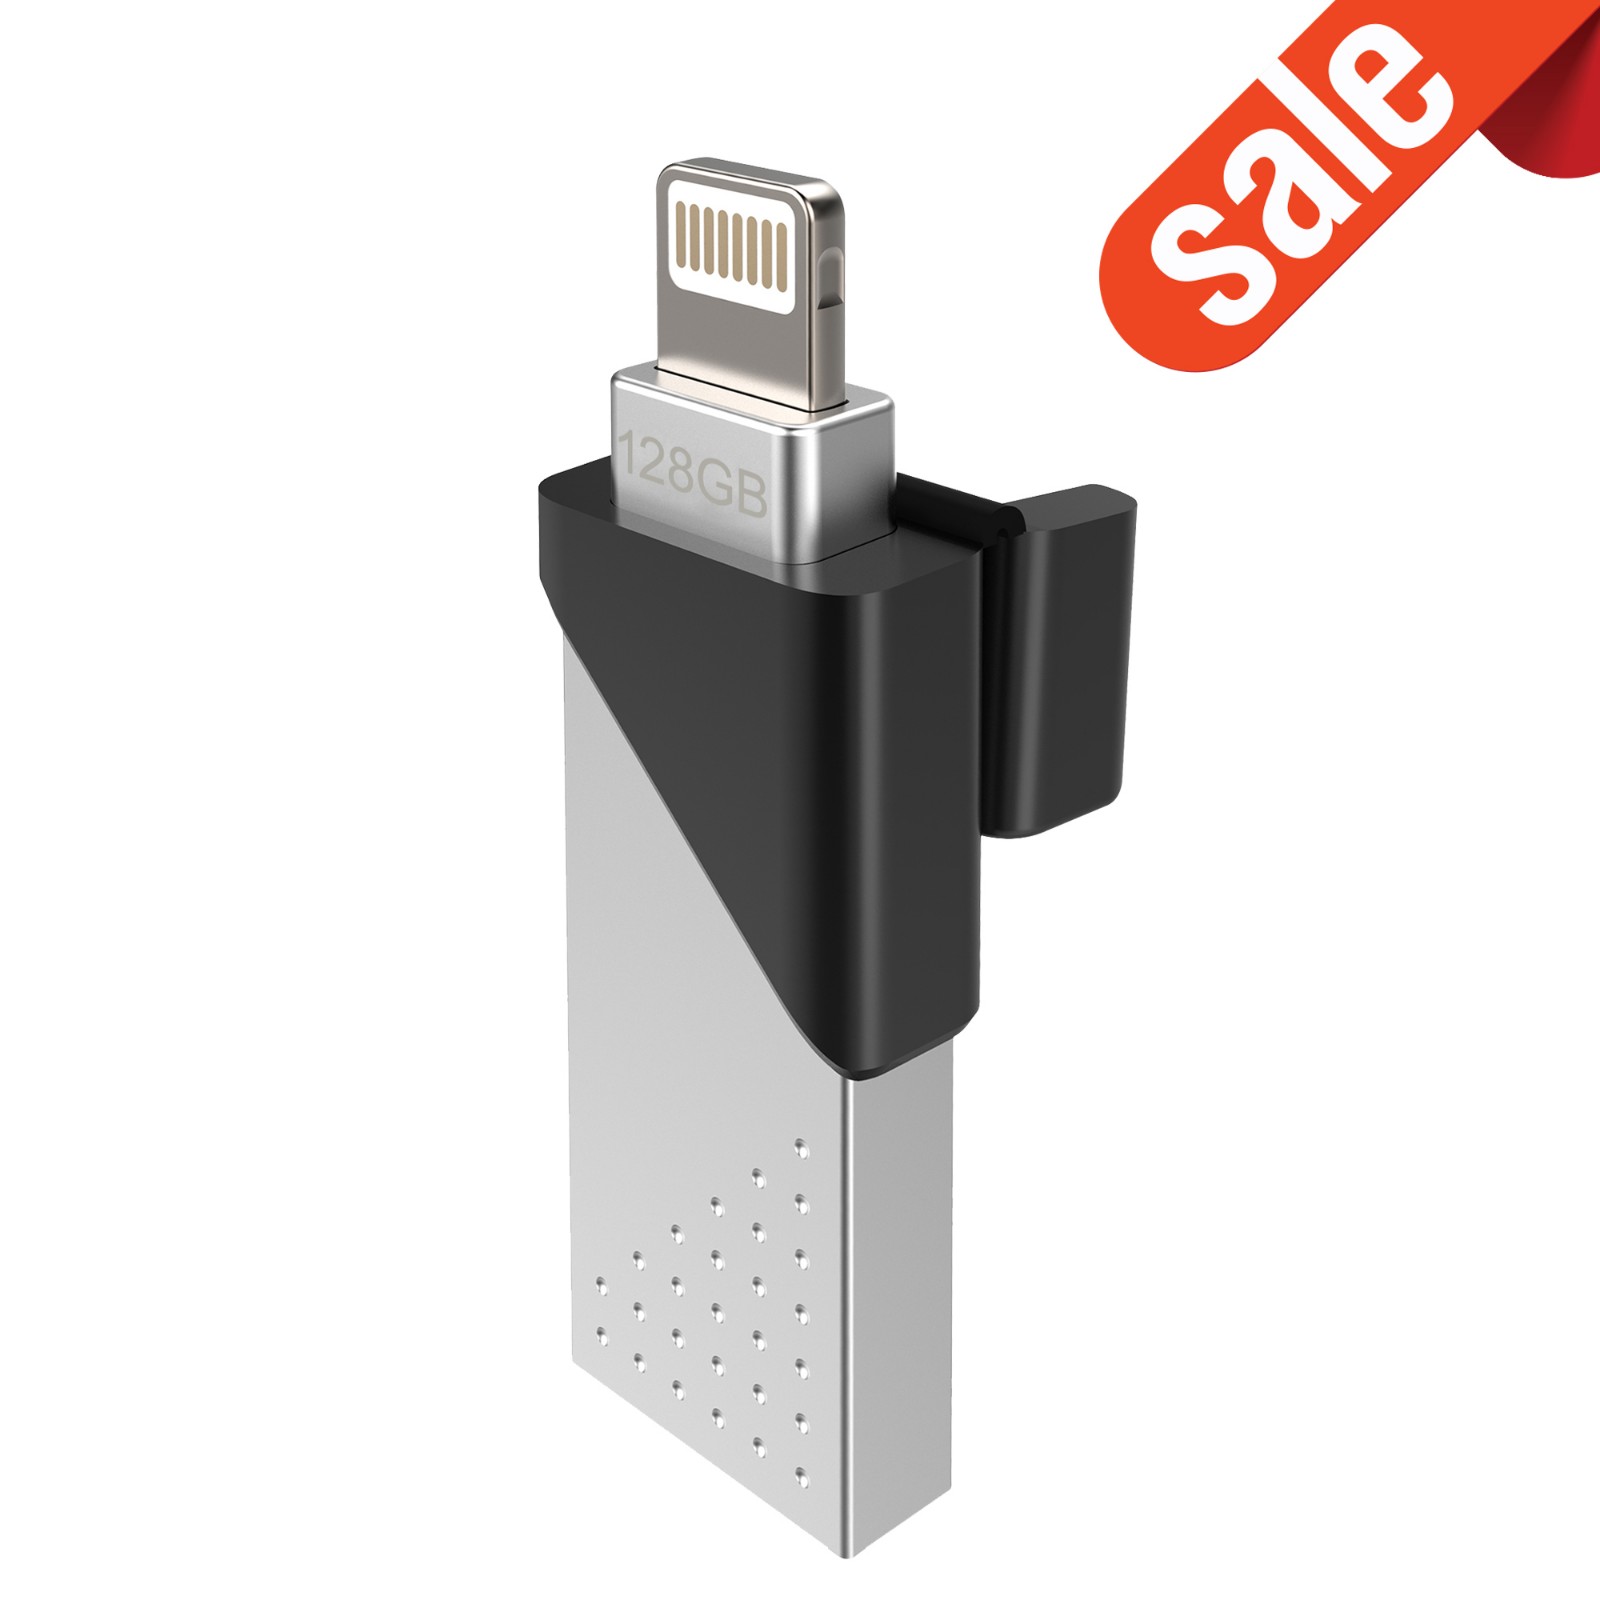 Silicon Power 128GB Z50 OTG Flash Drive for iPhone & iPad (Lightning/USB 3.1 Gen1)